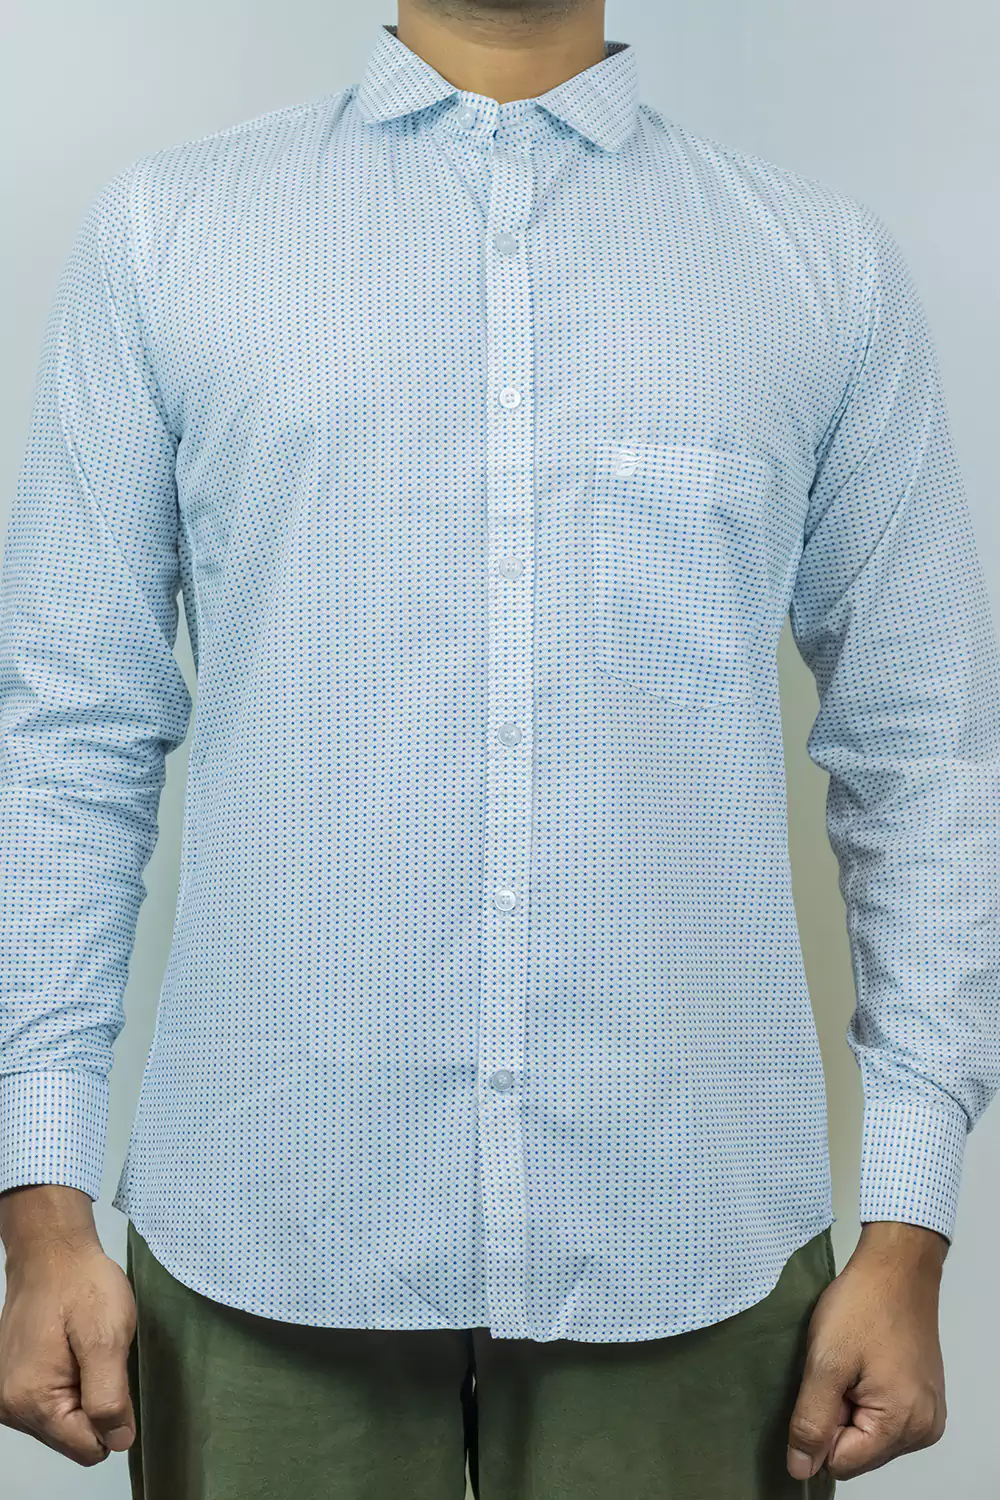 Simple Blue & White Printed Shirt